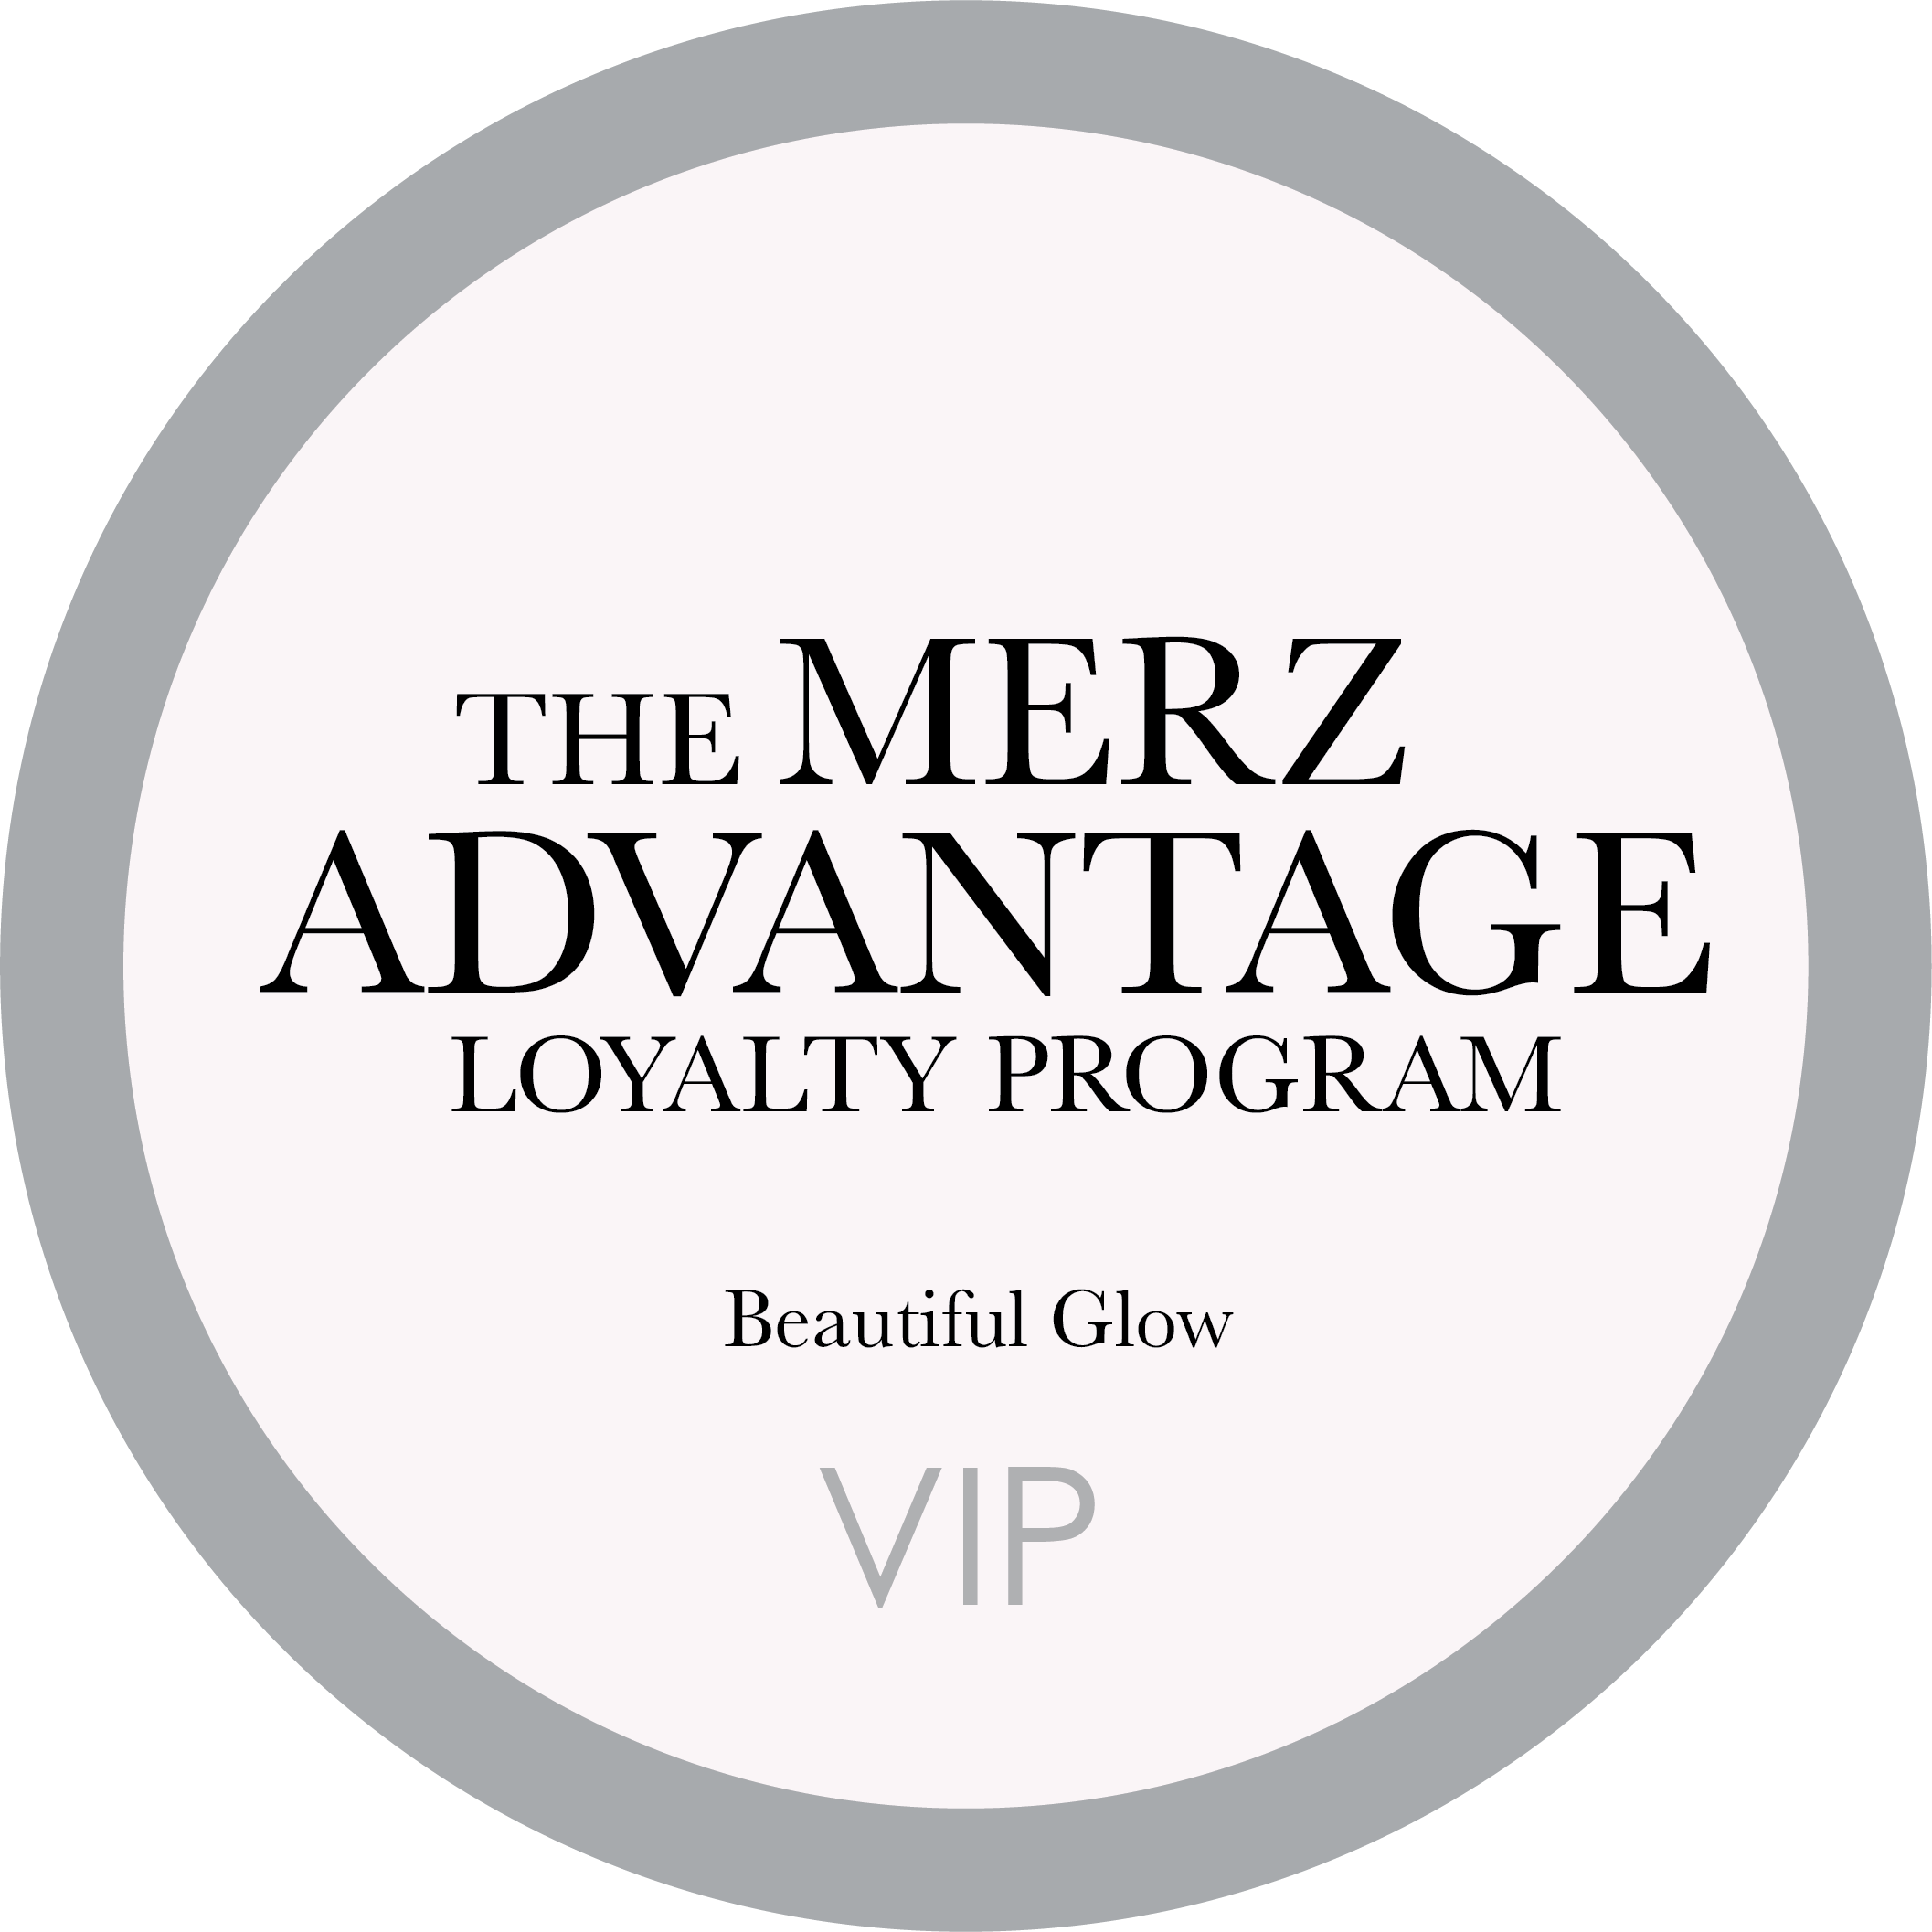 The Merz Advantage Loyalty Program